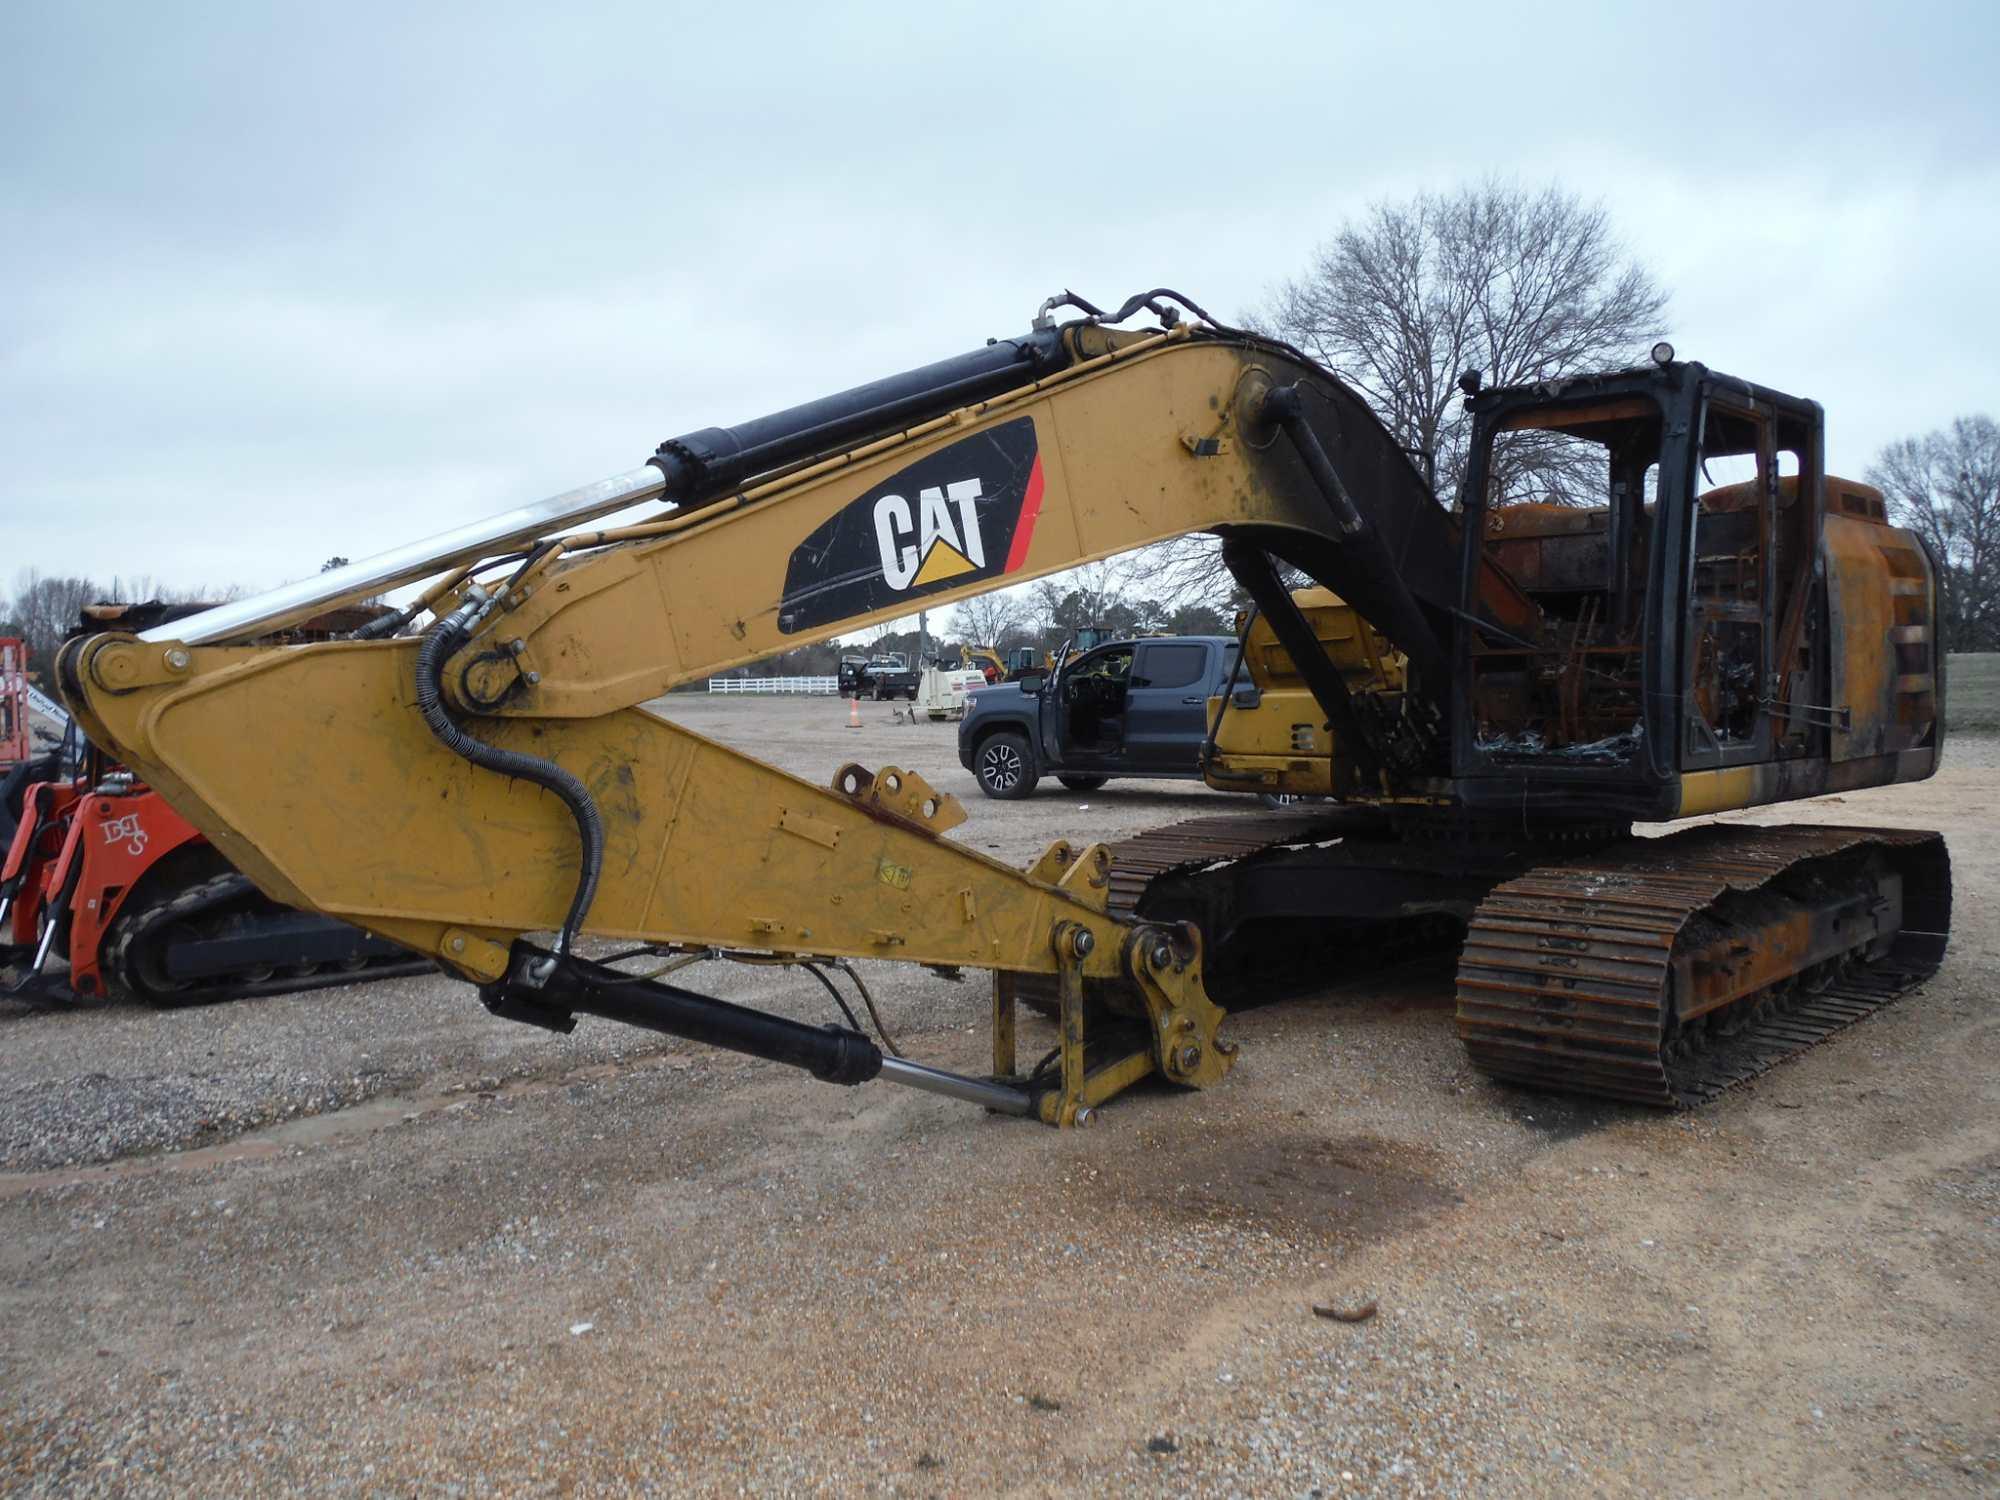 2015 Cat 323FL Excavator, s/n XCF00524 (Salvage): Burned, No Bkt.